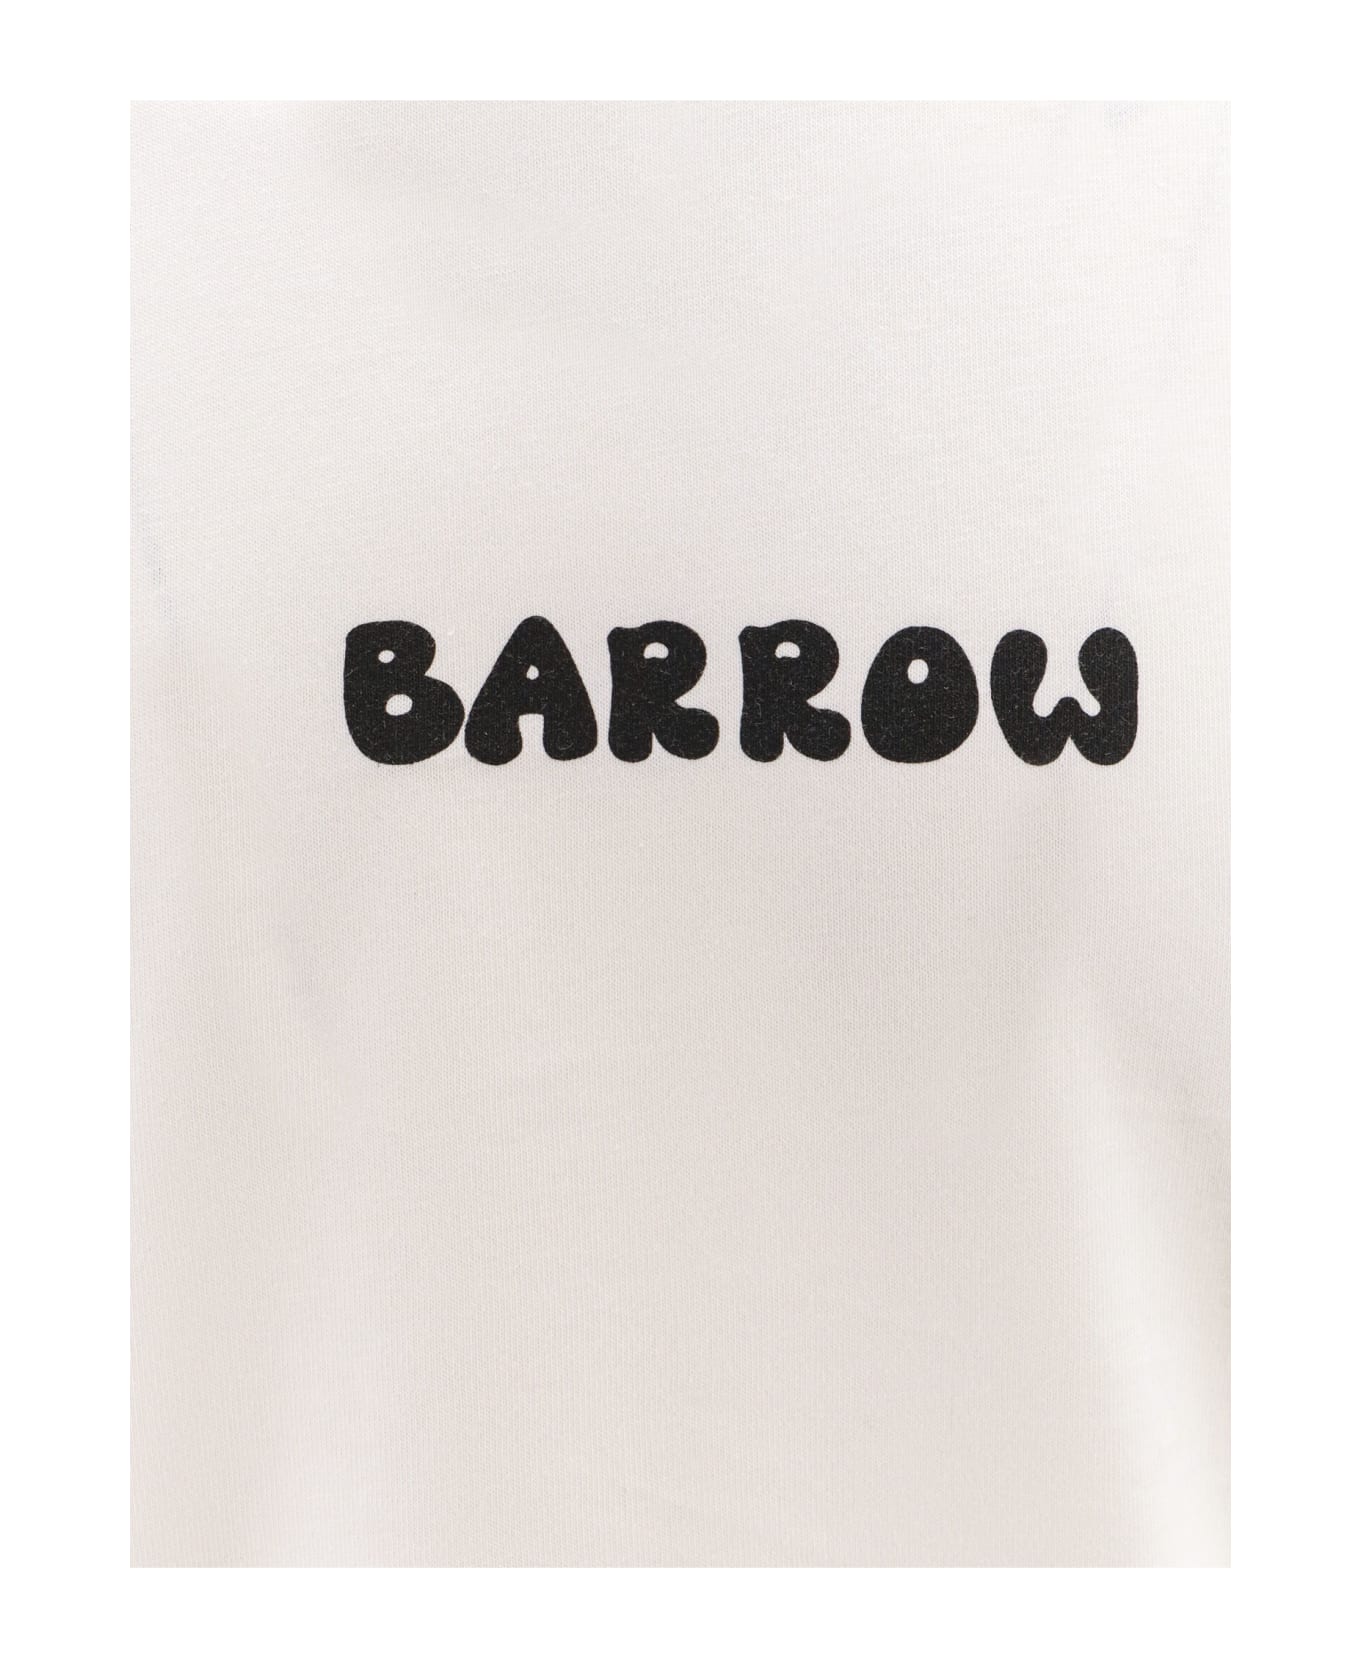 Barrow T-shirt - Bianco Tシャツ